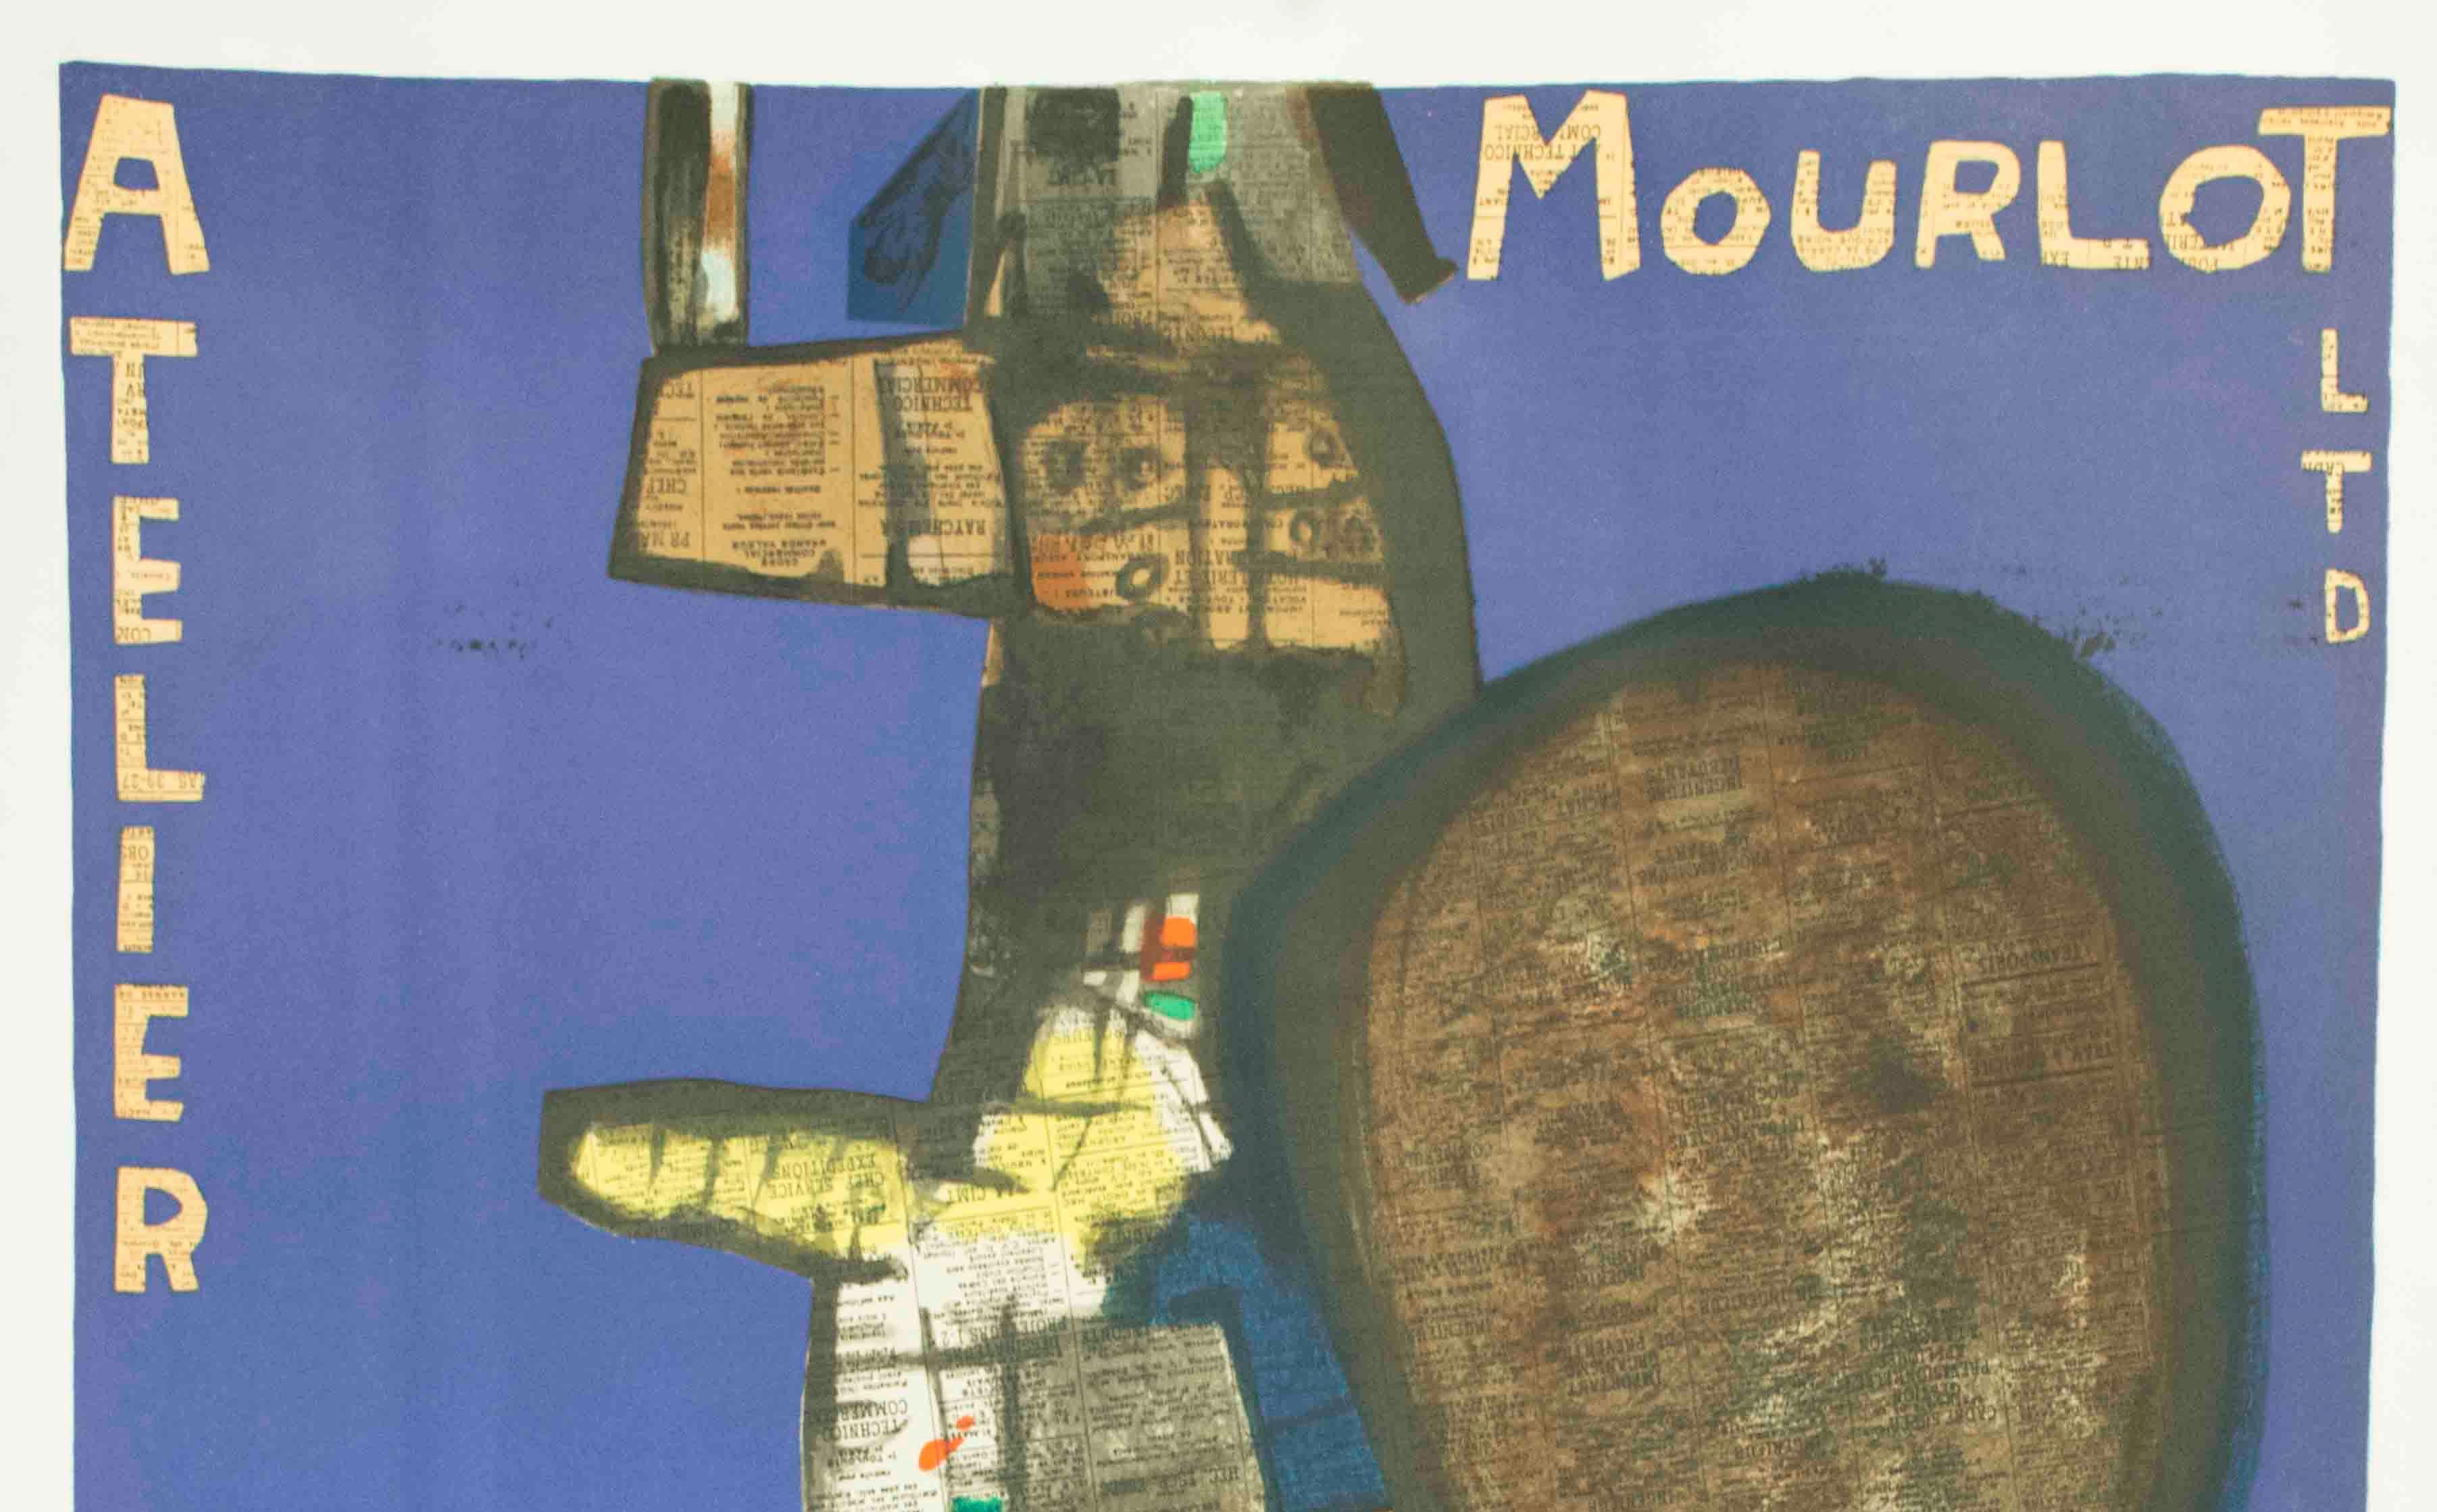 Atelier Mourlot, New York, 115 Bank Street - Print by Maurice Estève